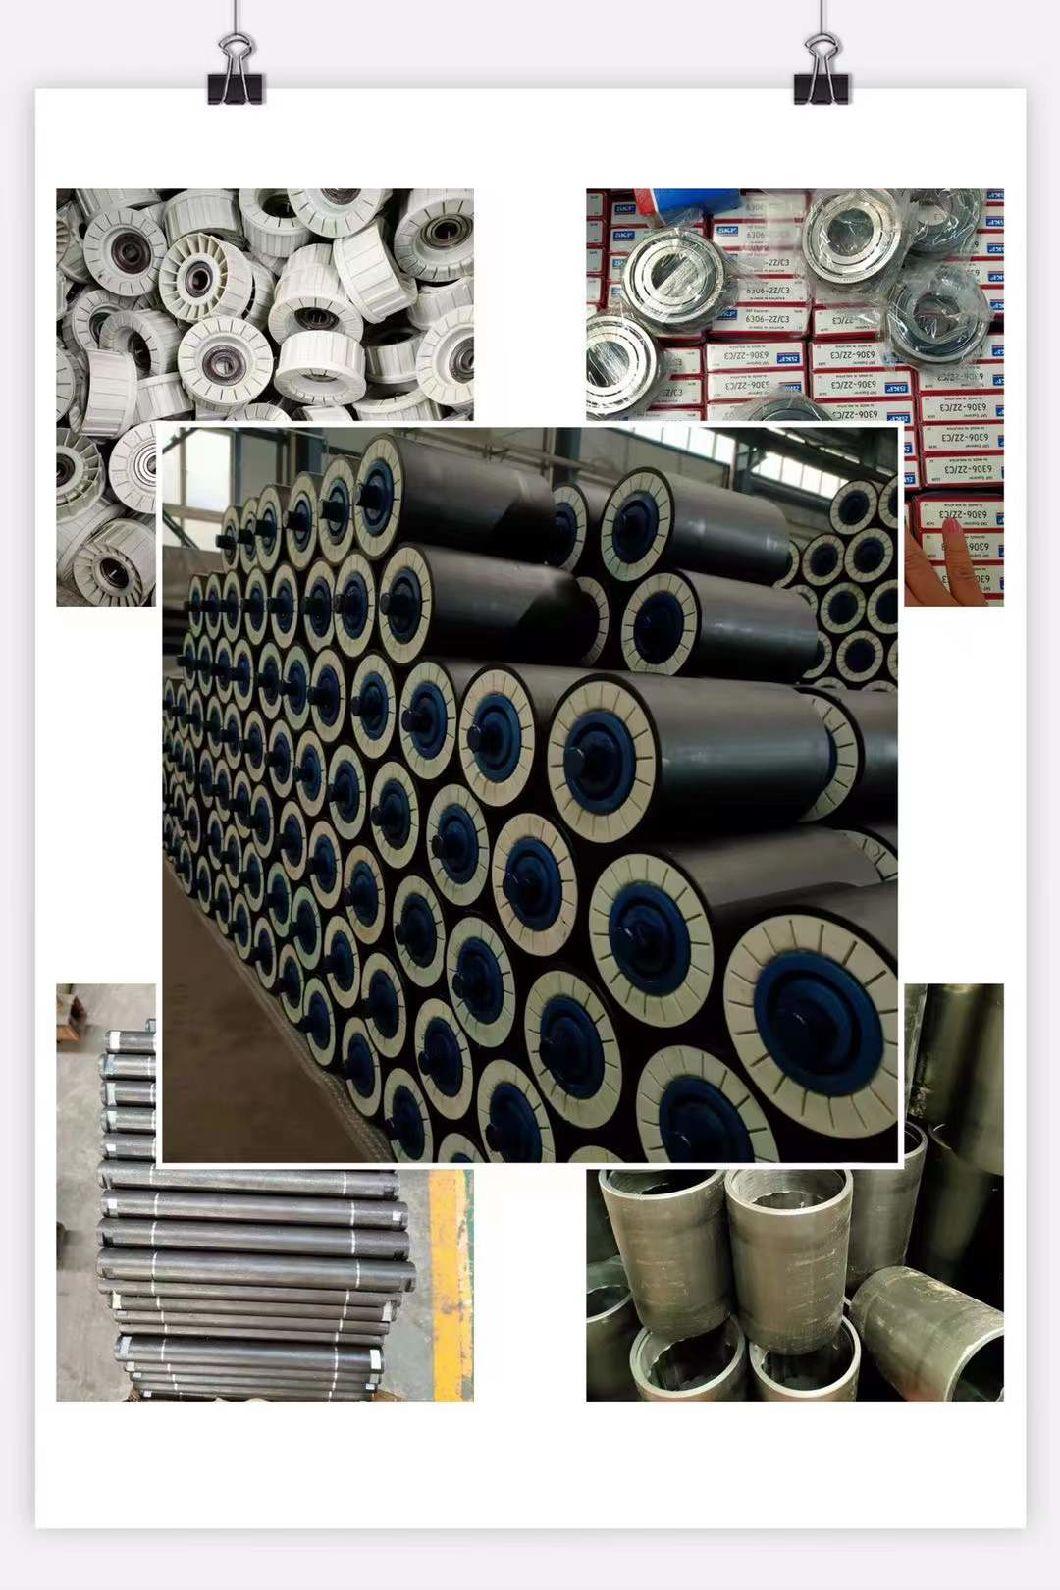 OEM E Customized Ceramic Lagging Conveyor HDPE Roller